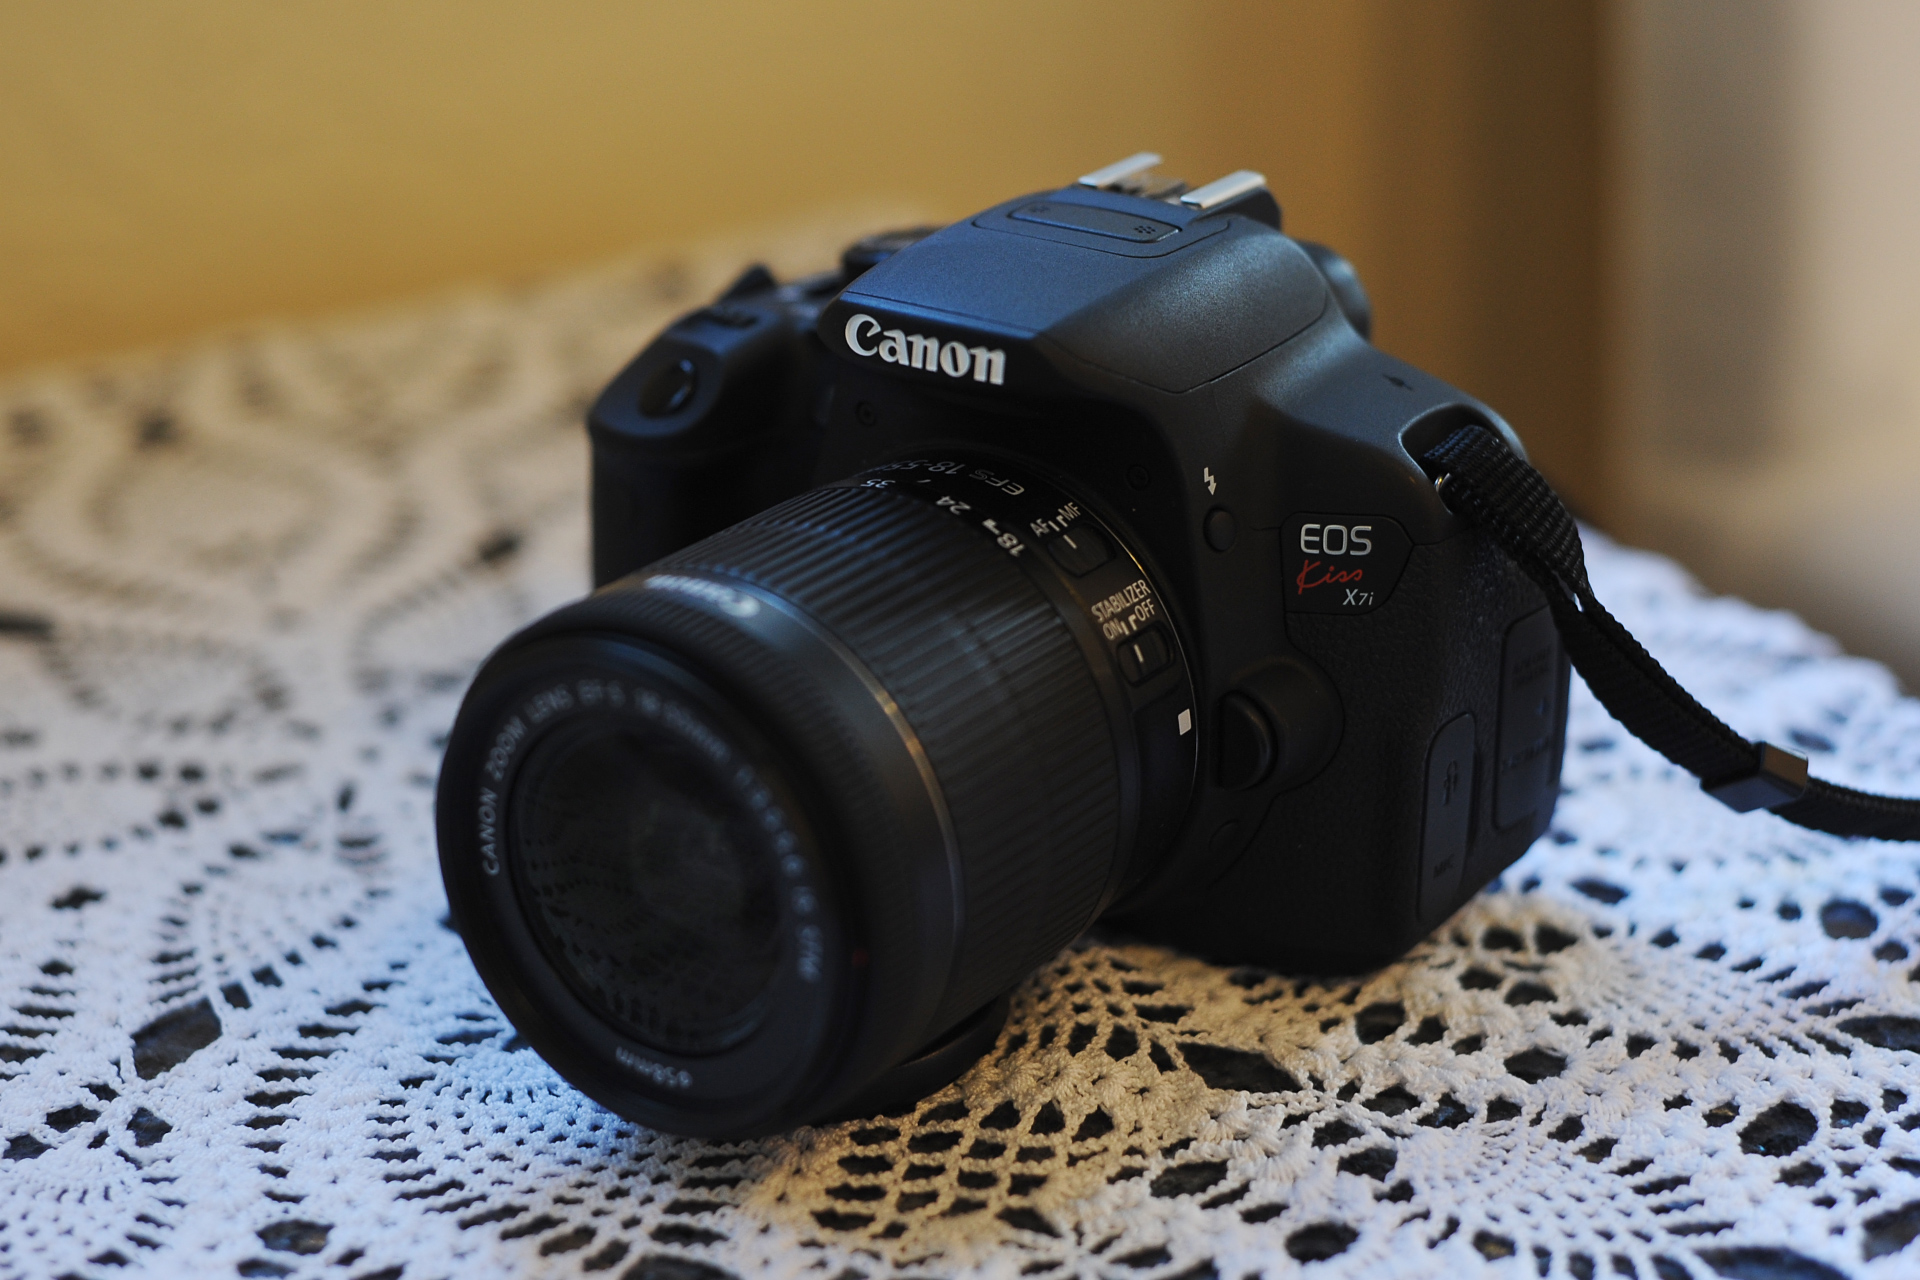 Canon EOS Kiss X7i SHOOTING REPORT | PHOTO YODOBASHI